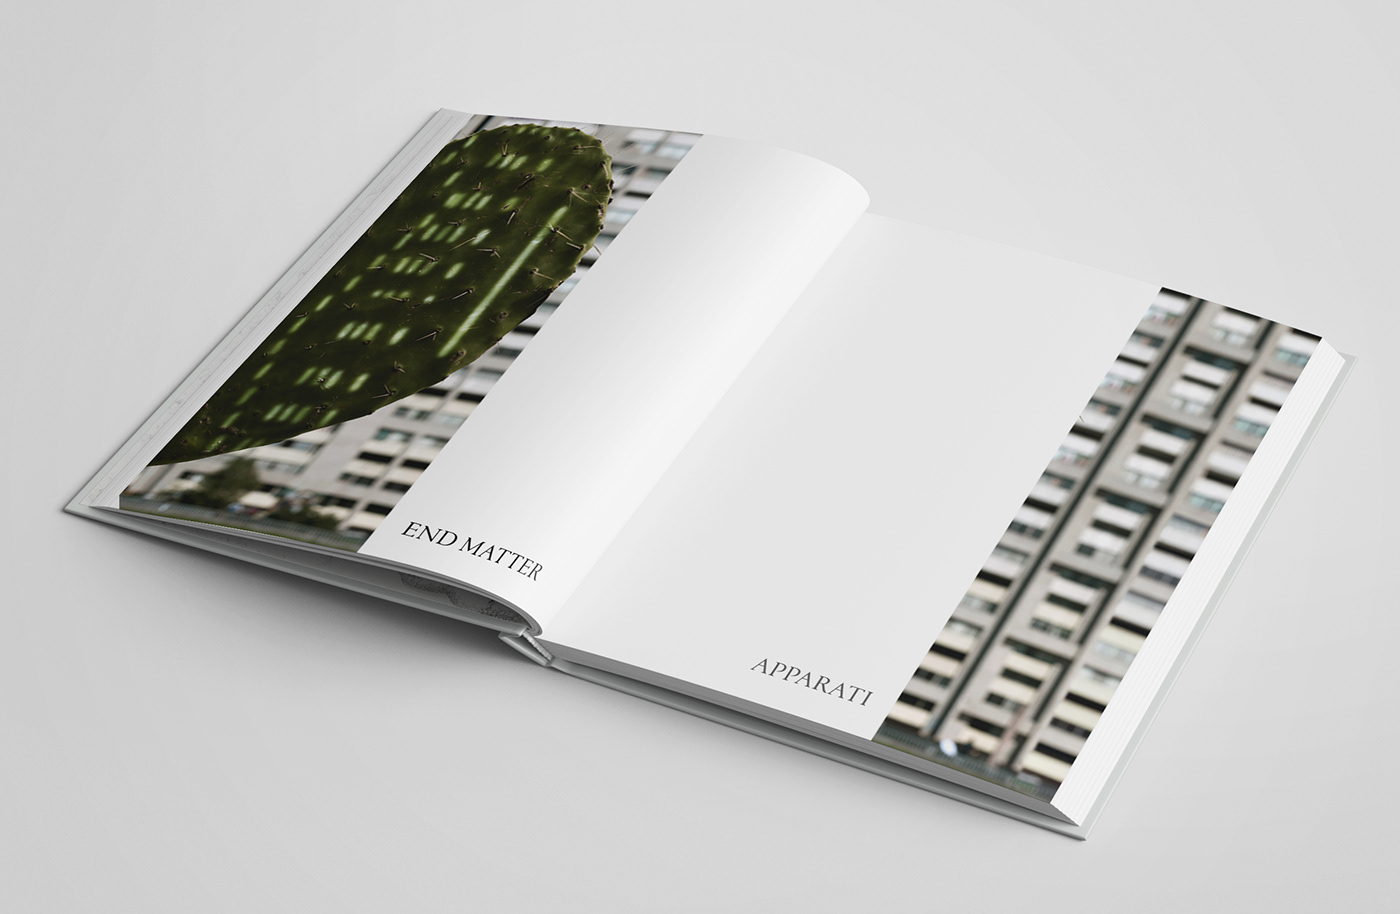 Anri Sala展览画册设计